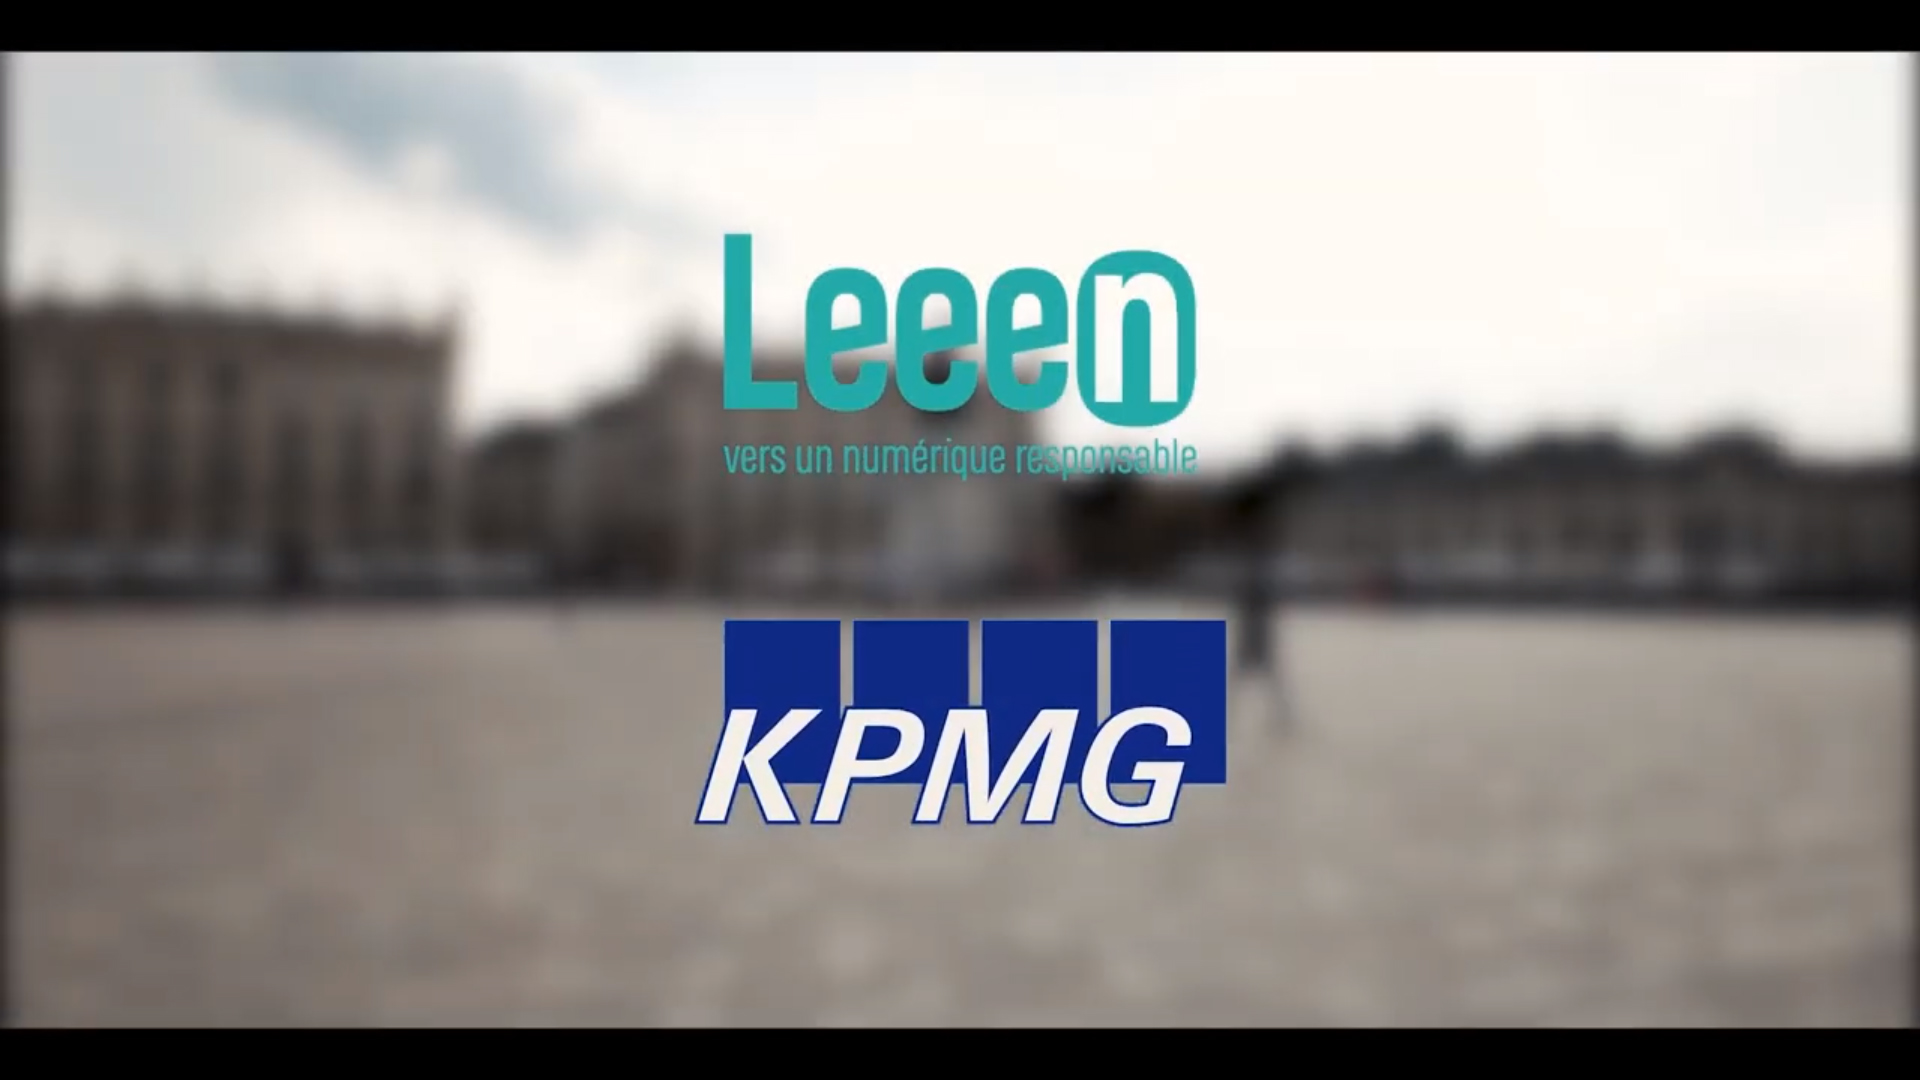 logo Leeen et logo KPMG